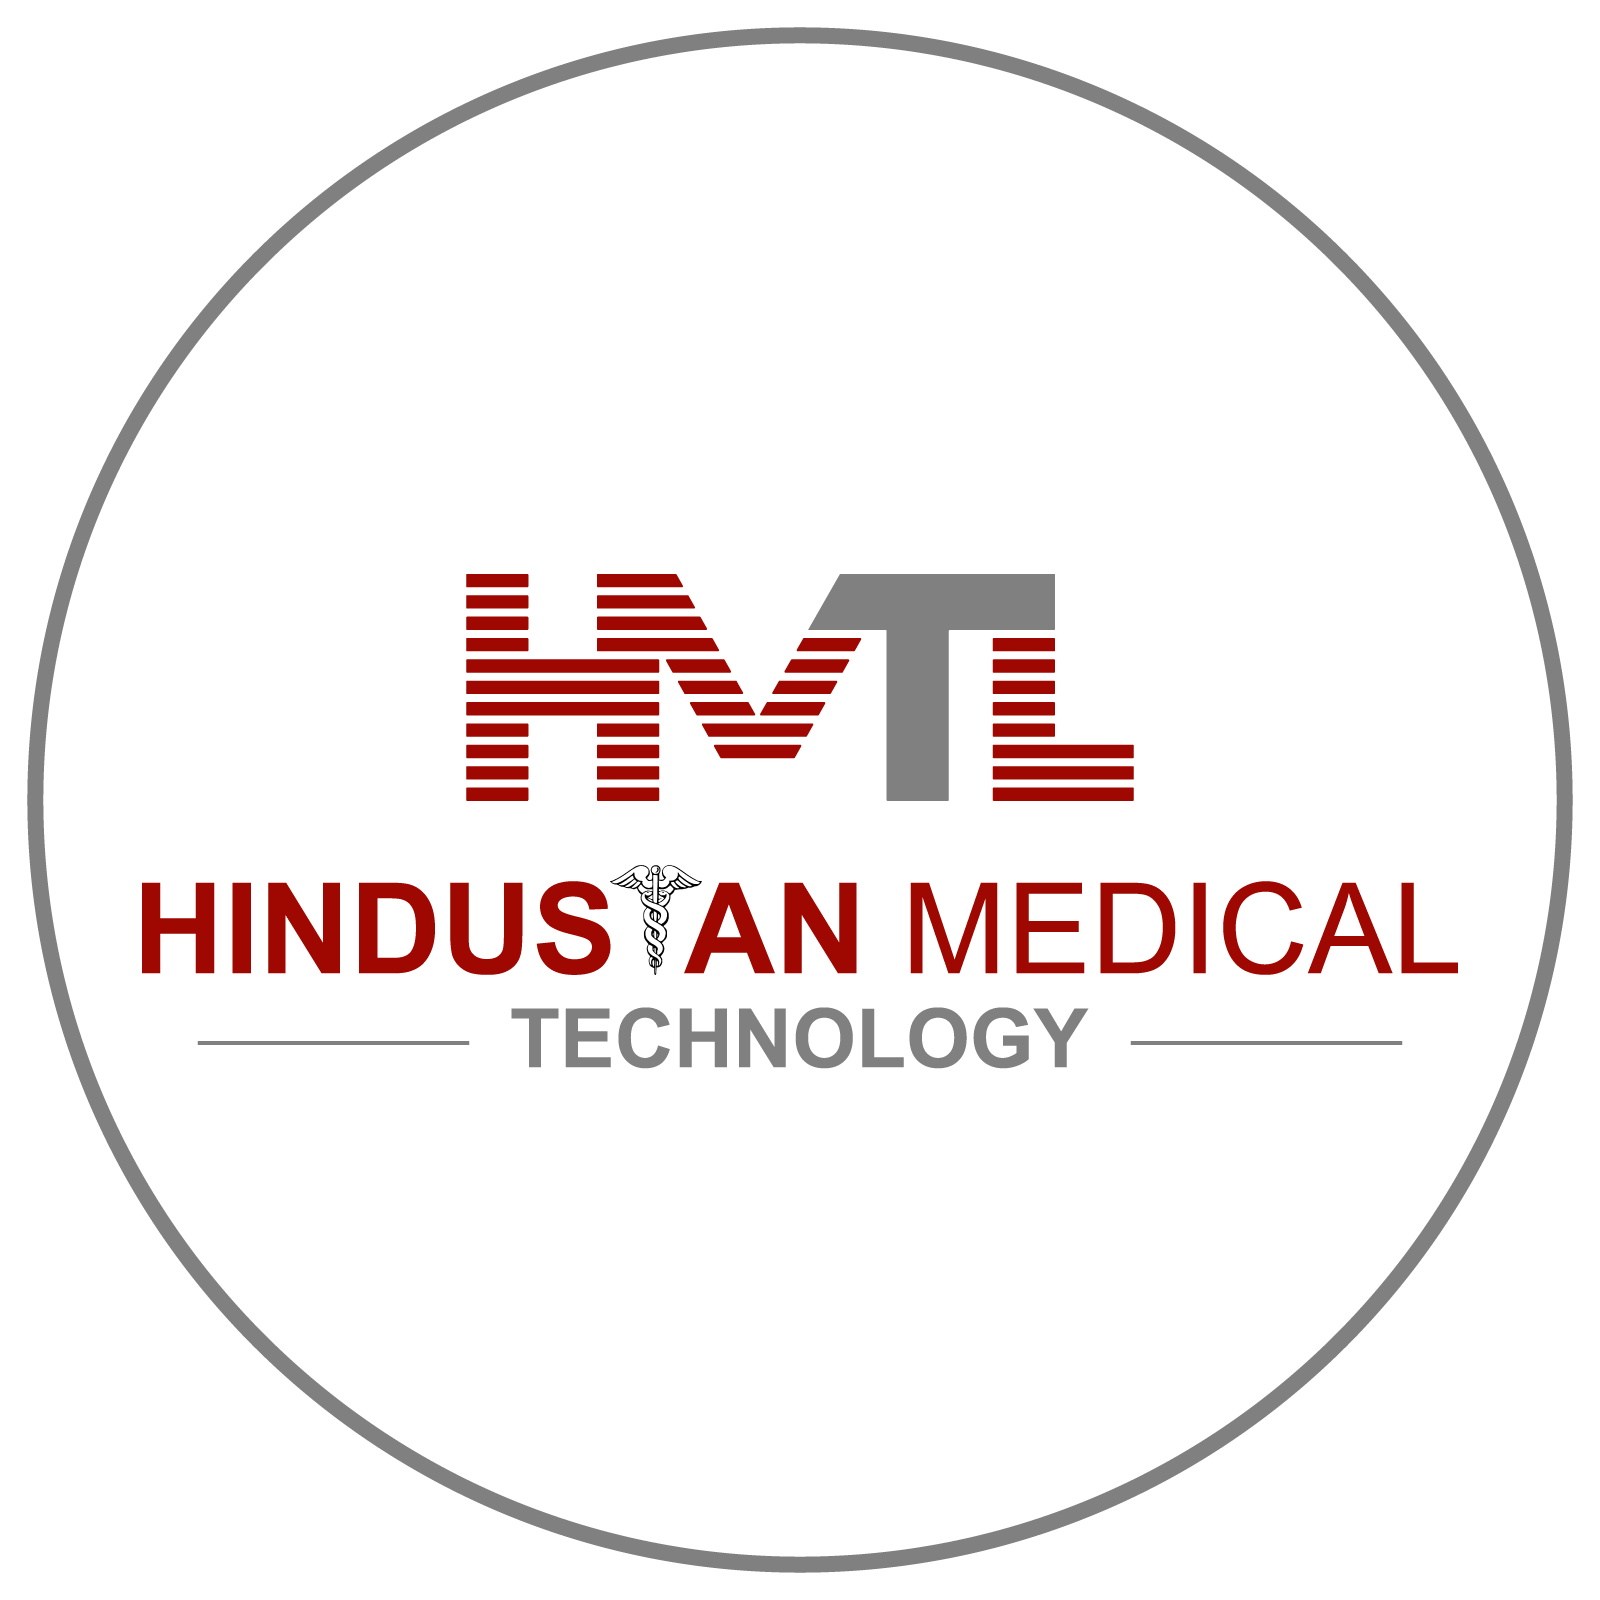 Hindustan Medical Technology